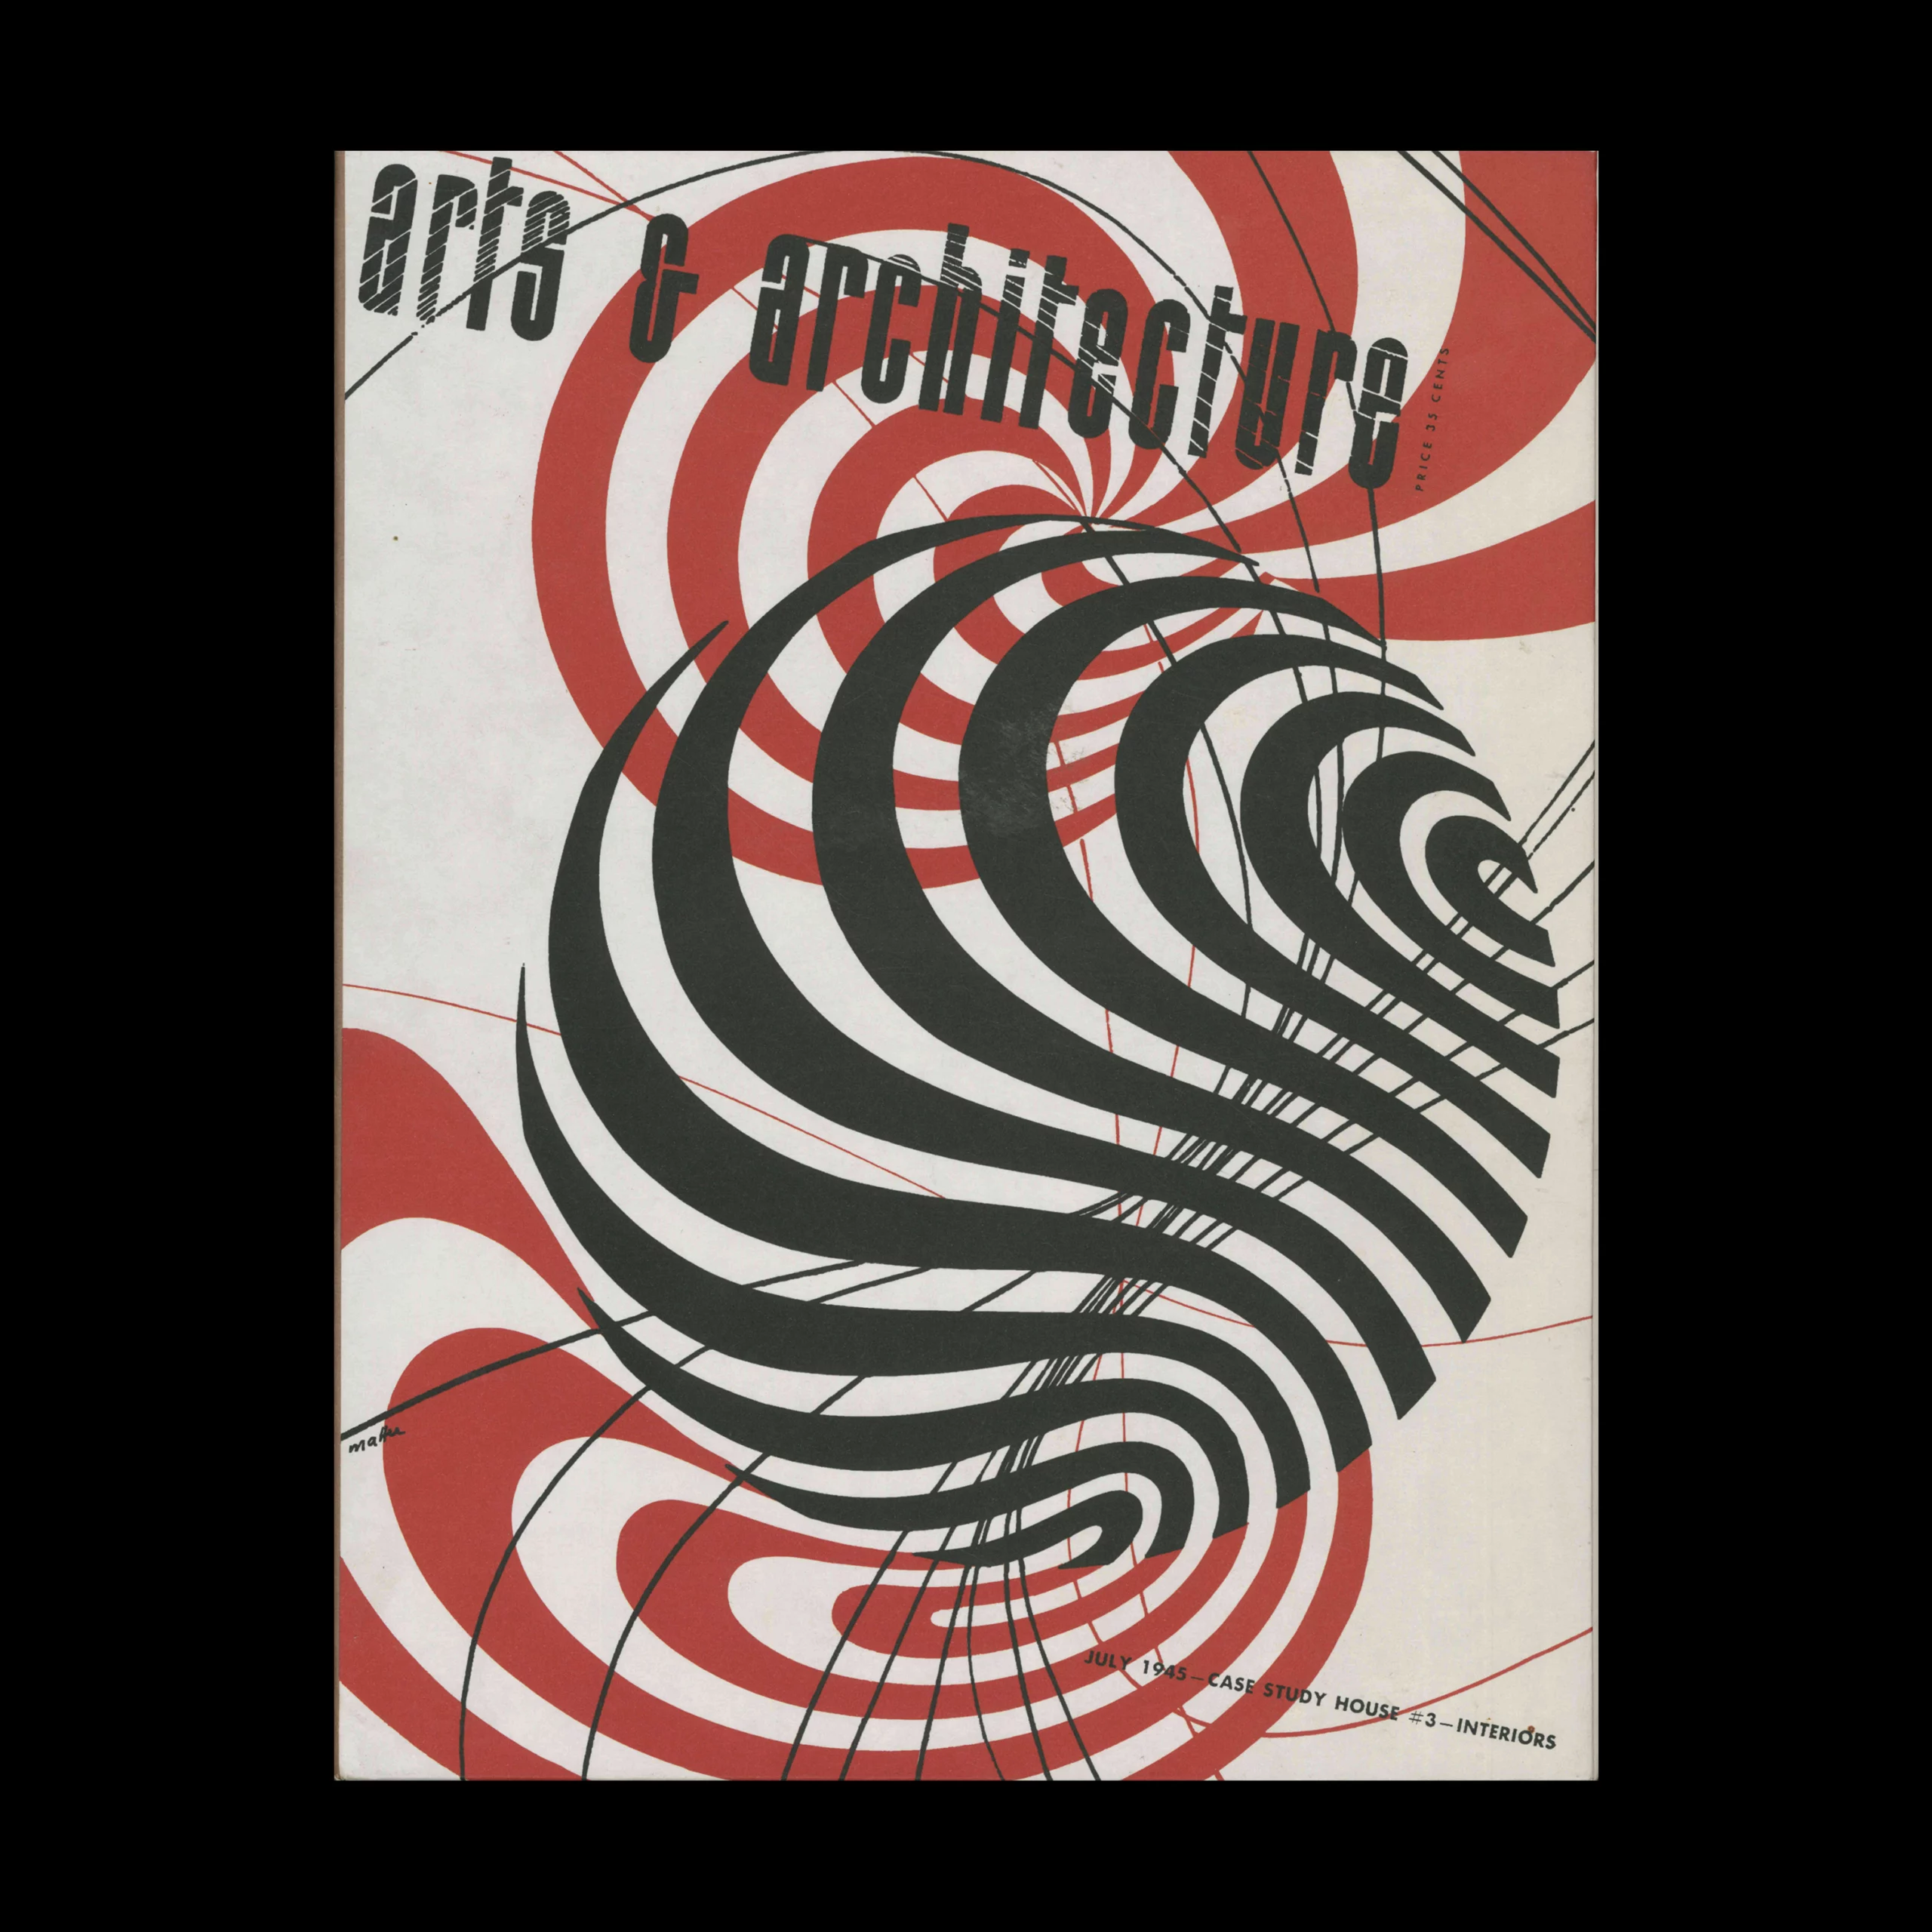 Arts & Architecture 1945, Complete Reprint, Taschen, 2008. Cover design by Herbert Matter